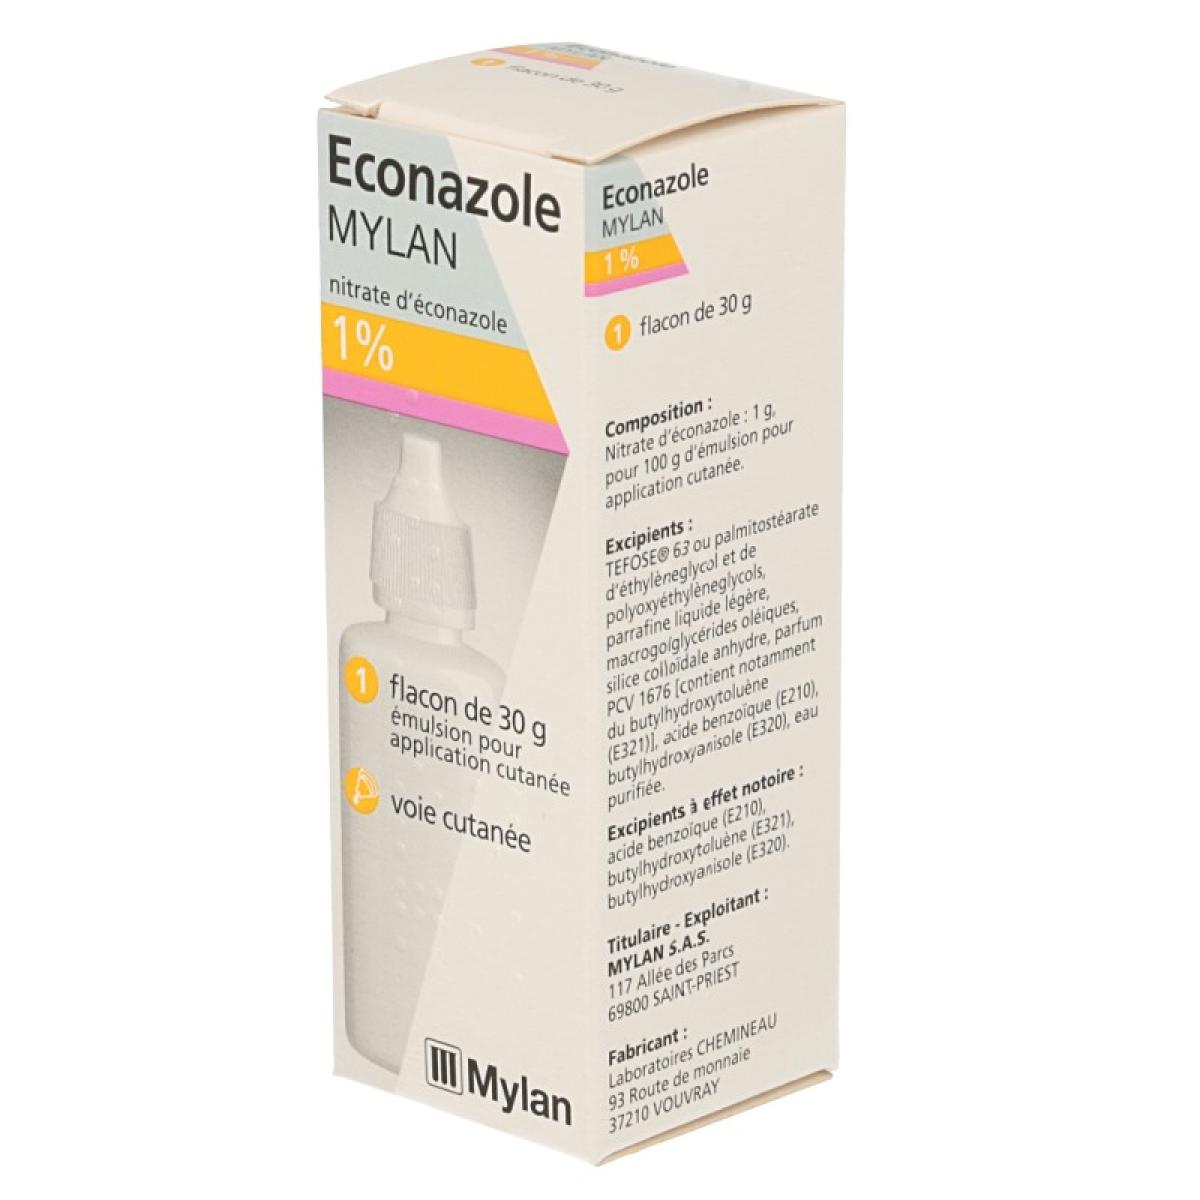 Mylan Econazole 1 Emulsion Pour Application Cutanee Flacon De 30g Medicaments Pharmarket